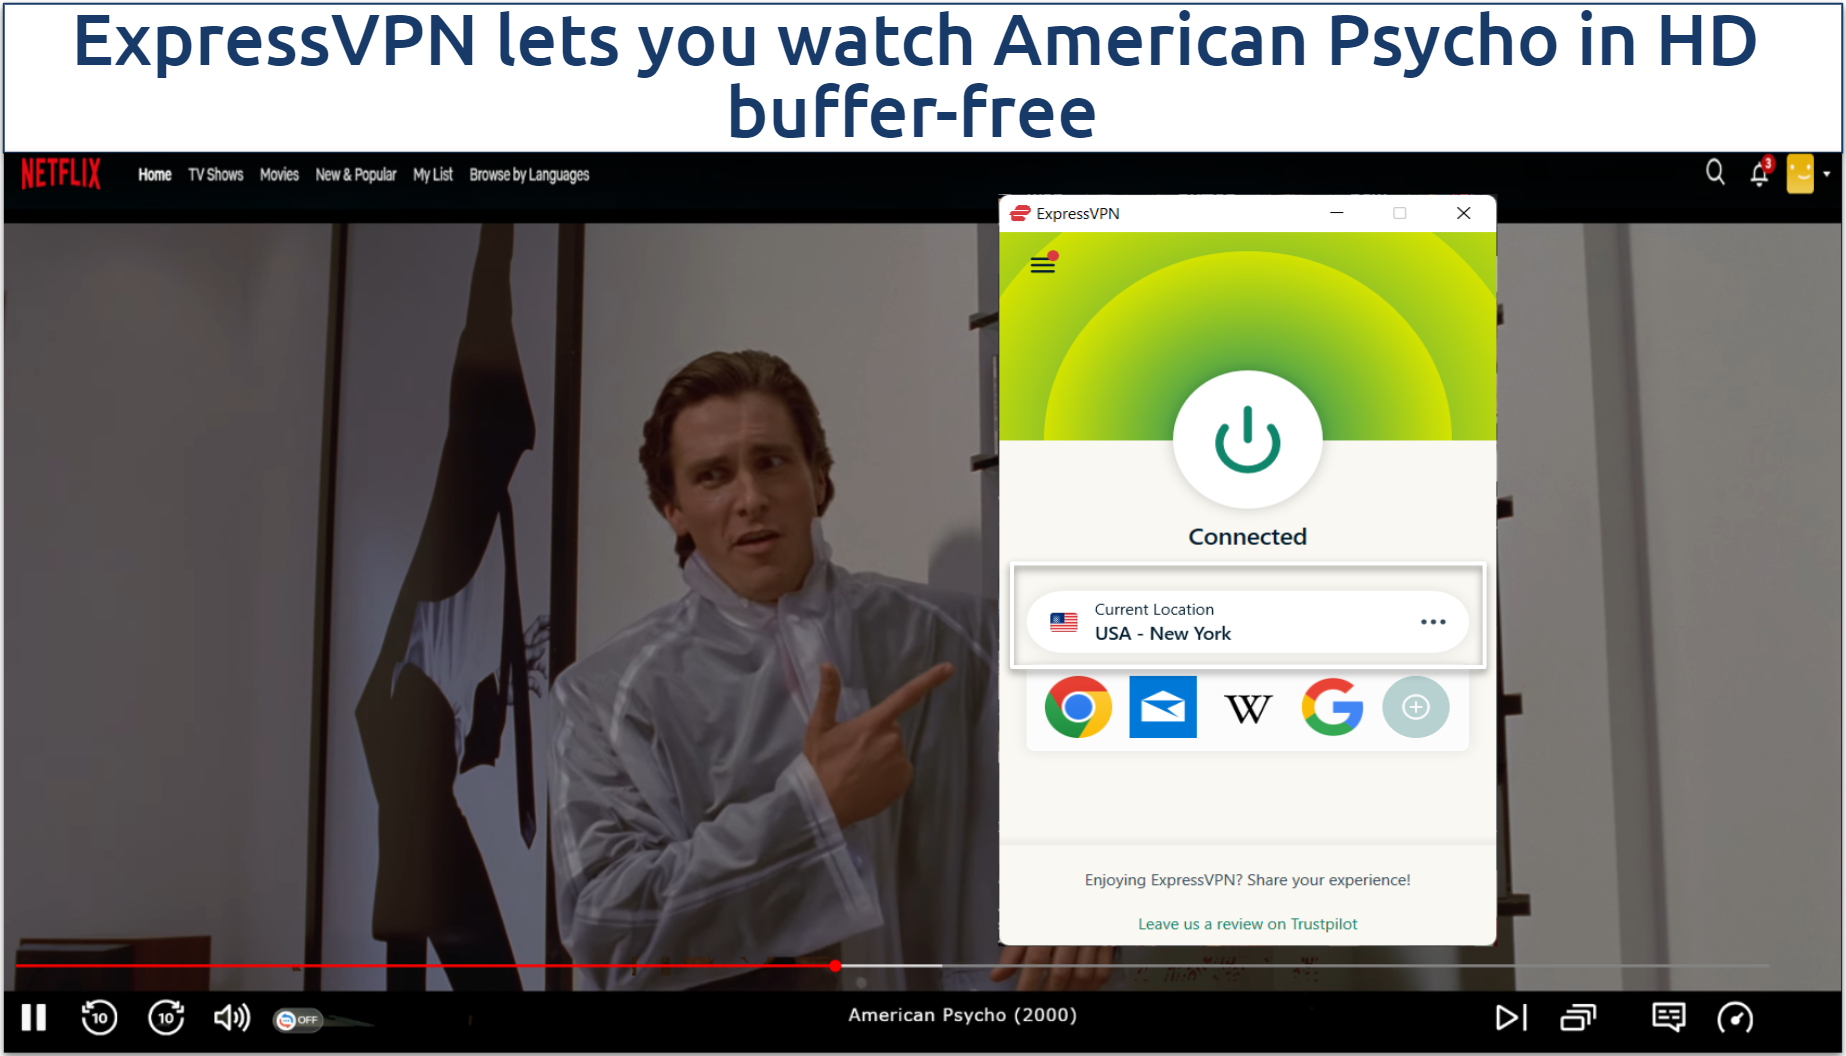 Screenshot of American Psycho on Netflix with ExpressVPN